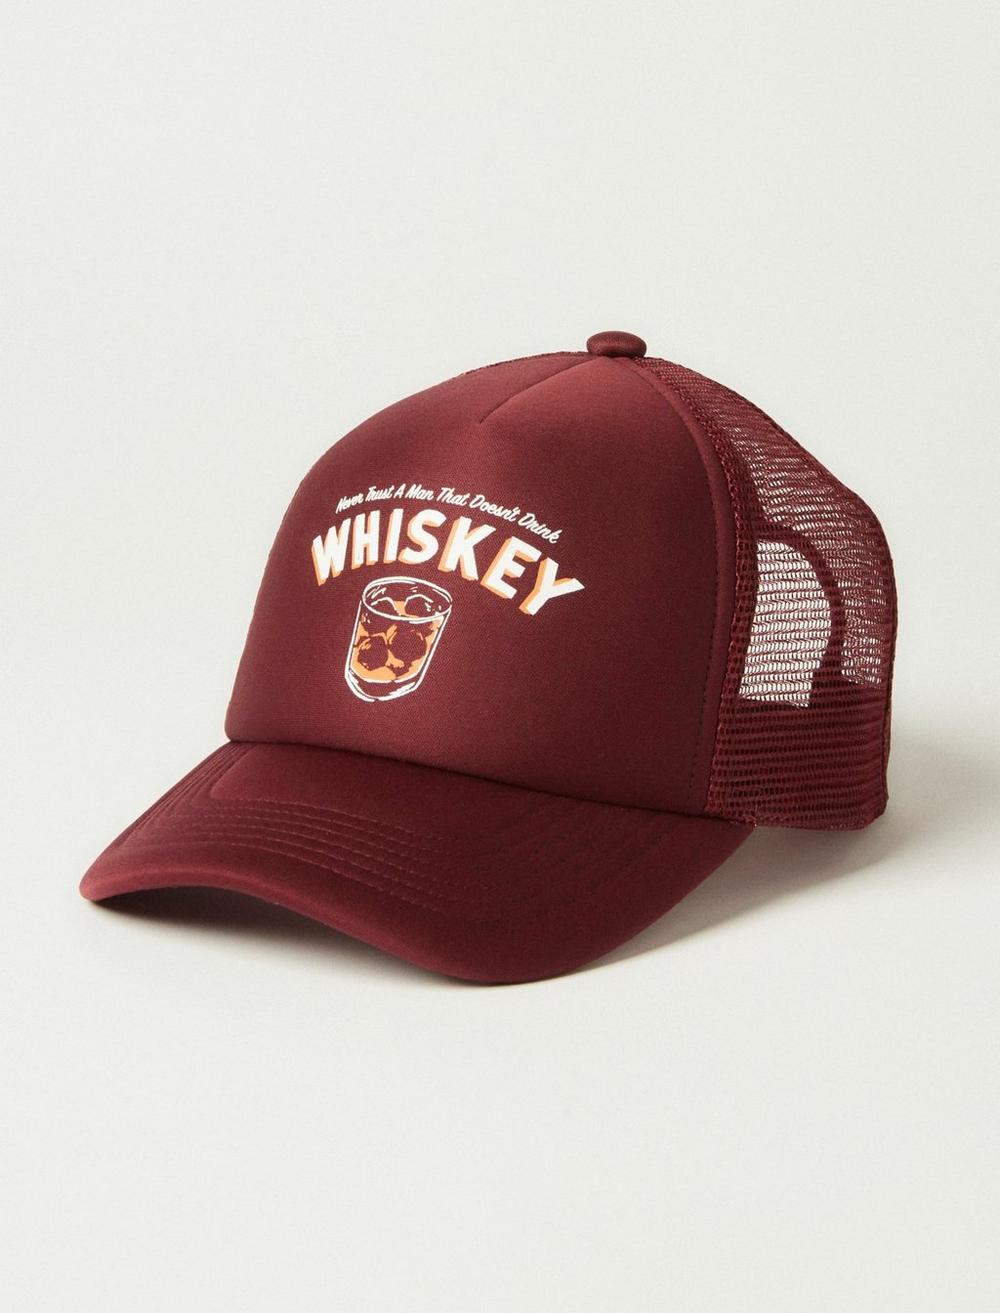 DRINK WHISKEY TRUCKER HAT, image 1